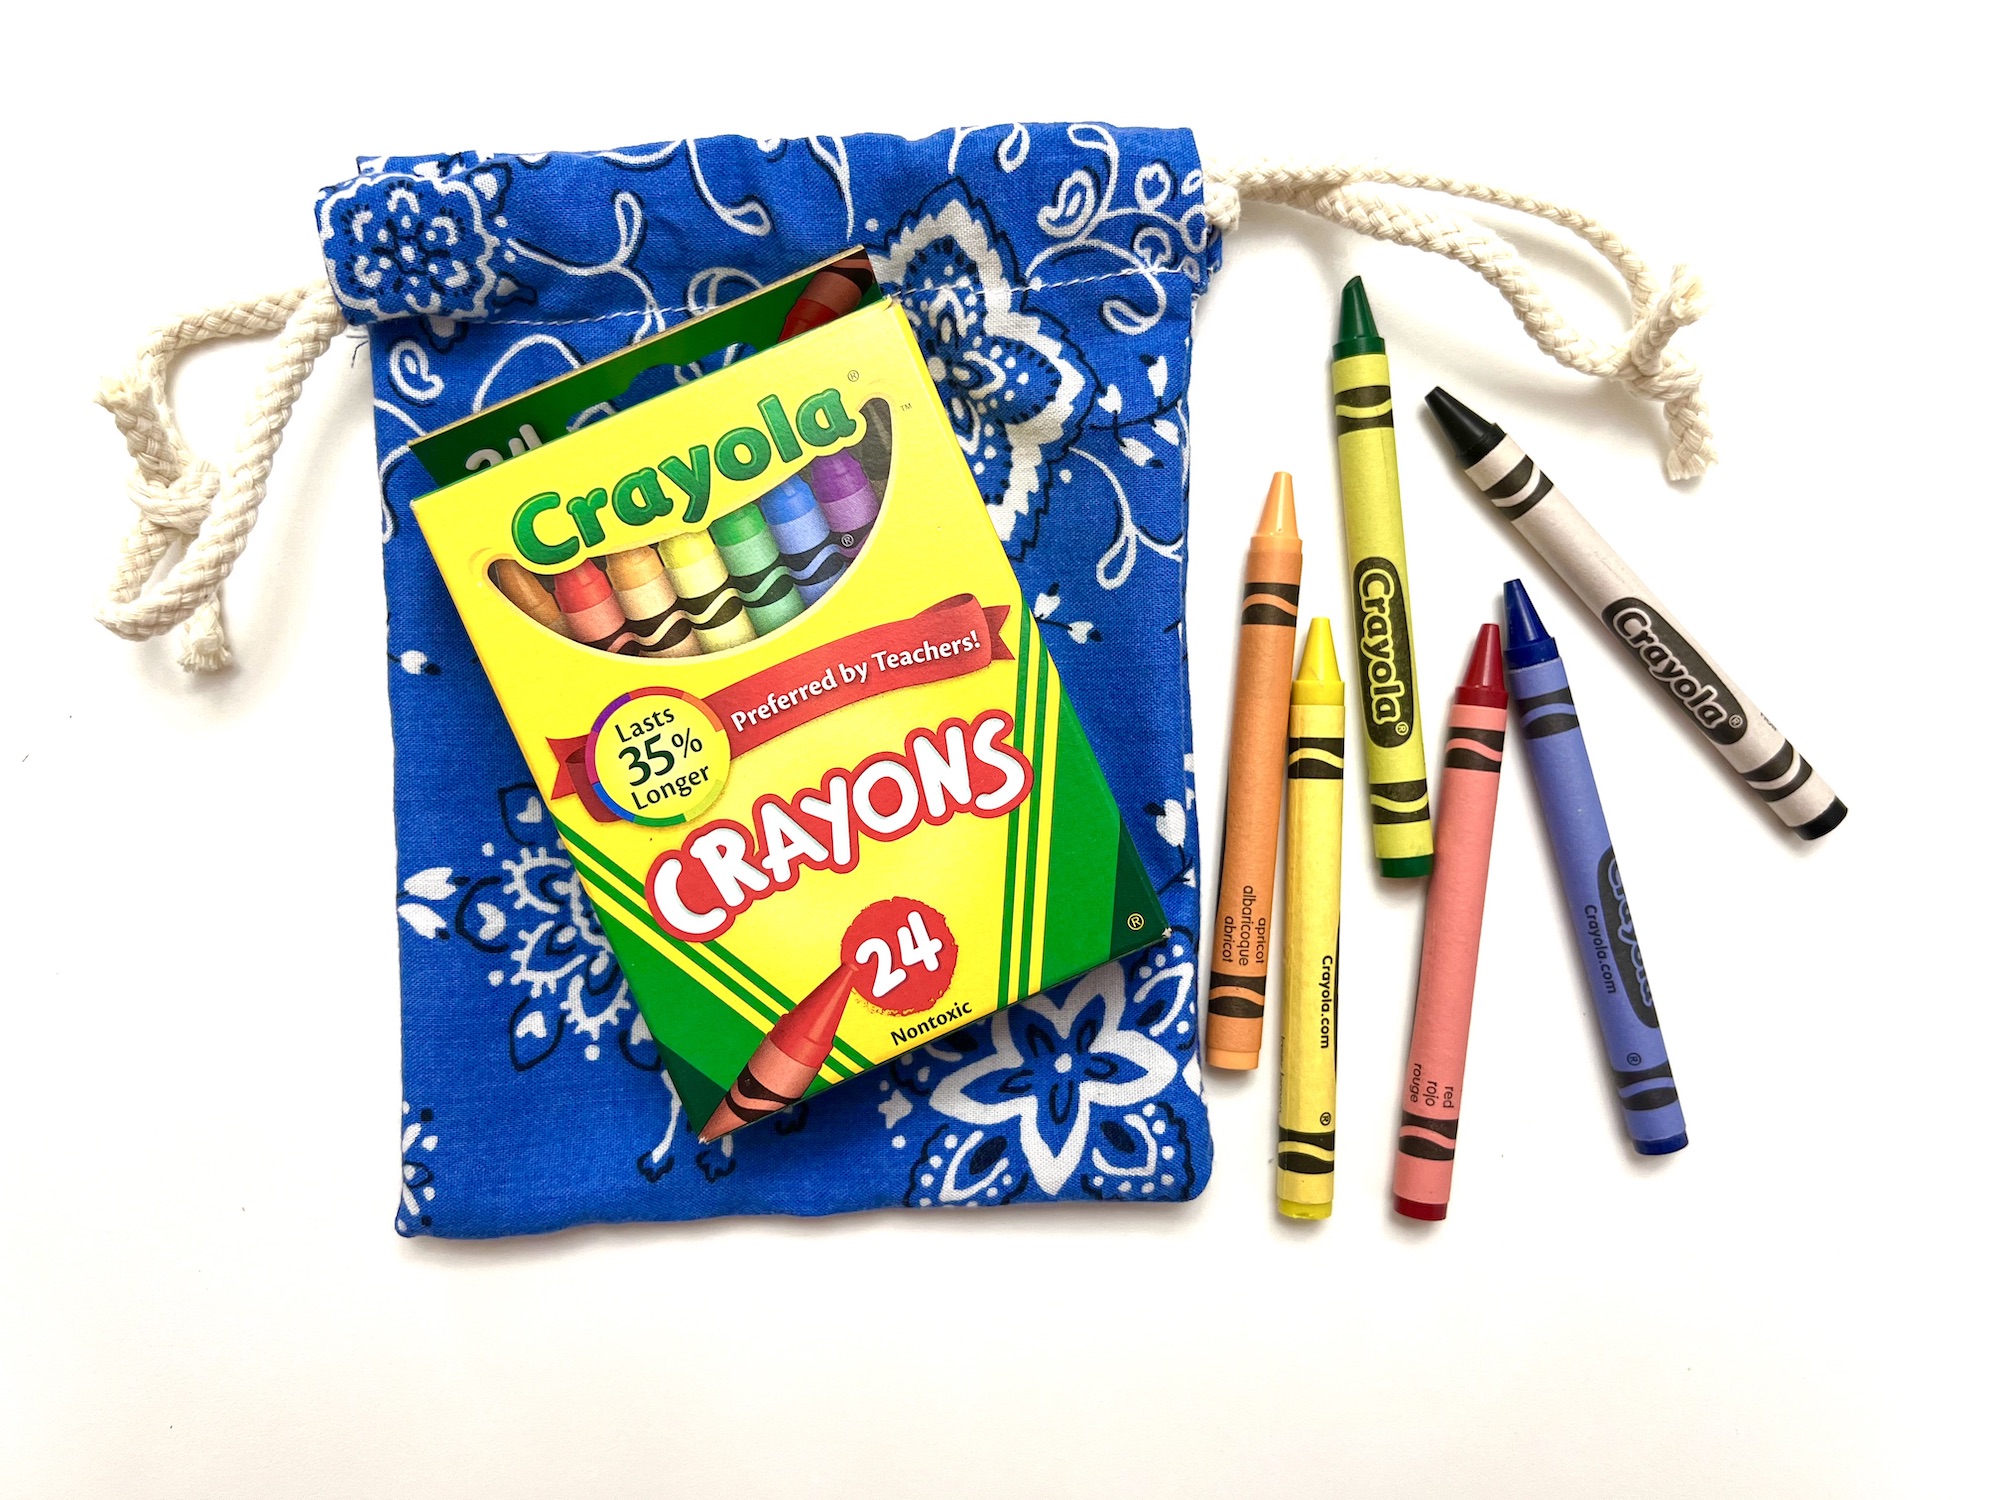 Crayola crayon bag in blue with a drawstring.